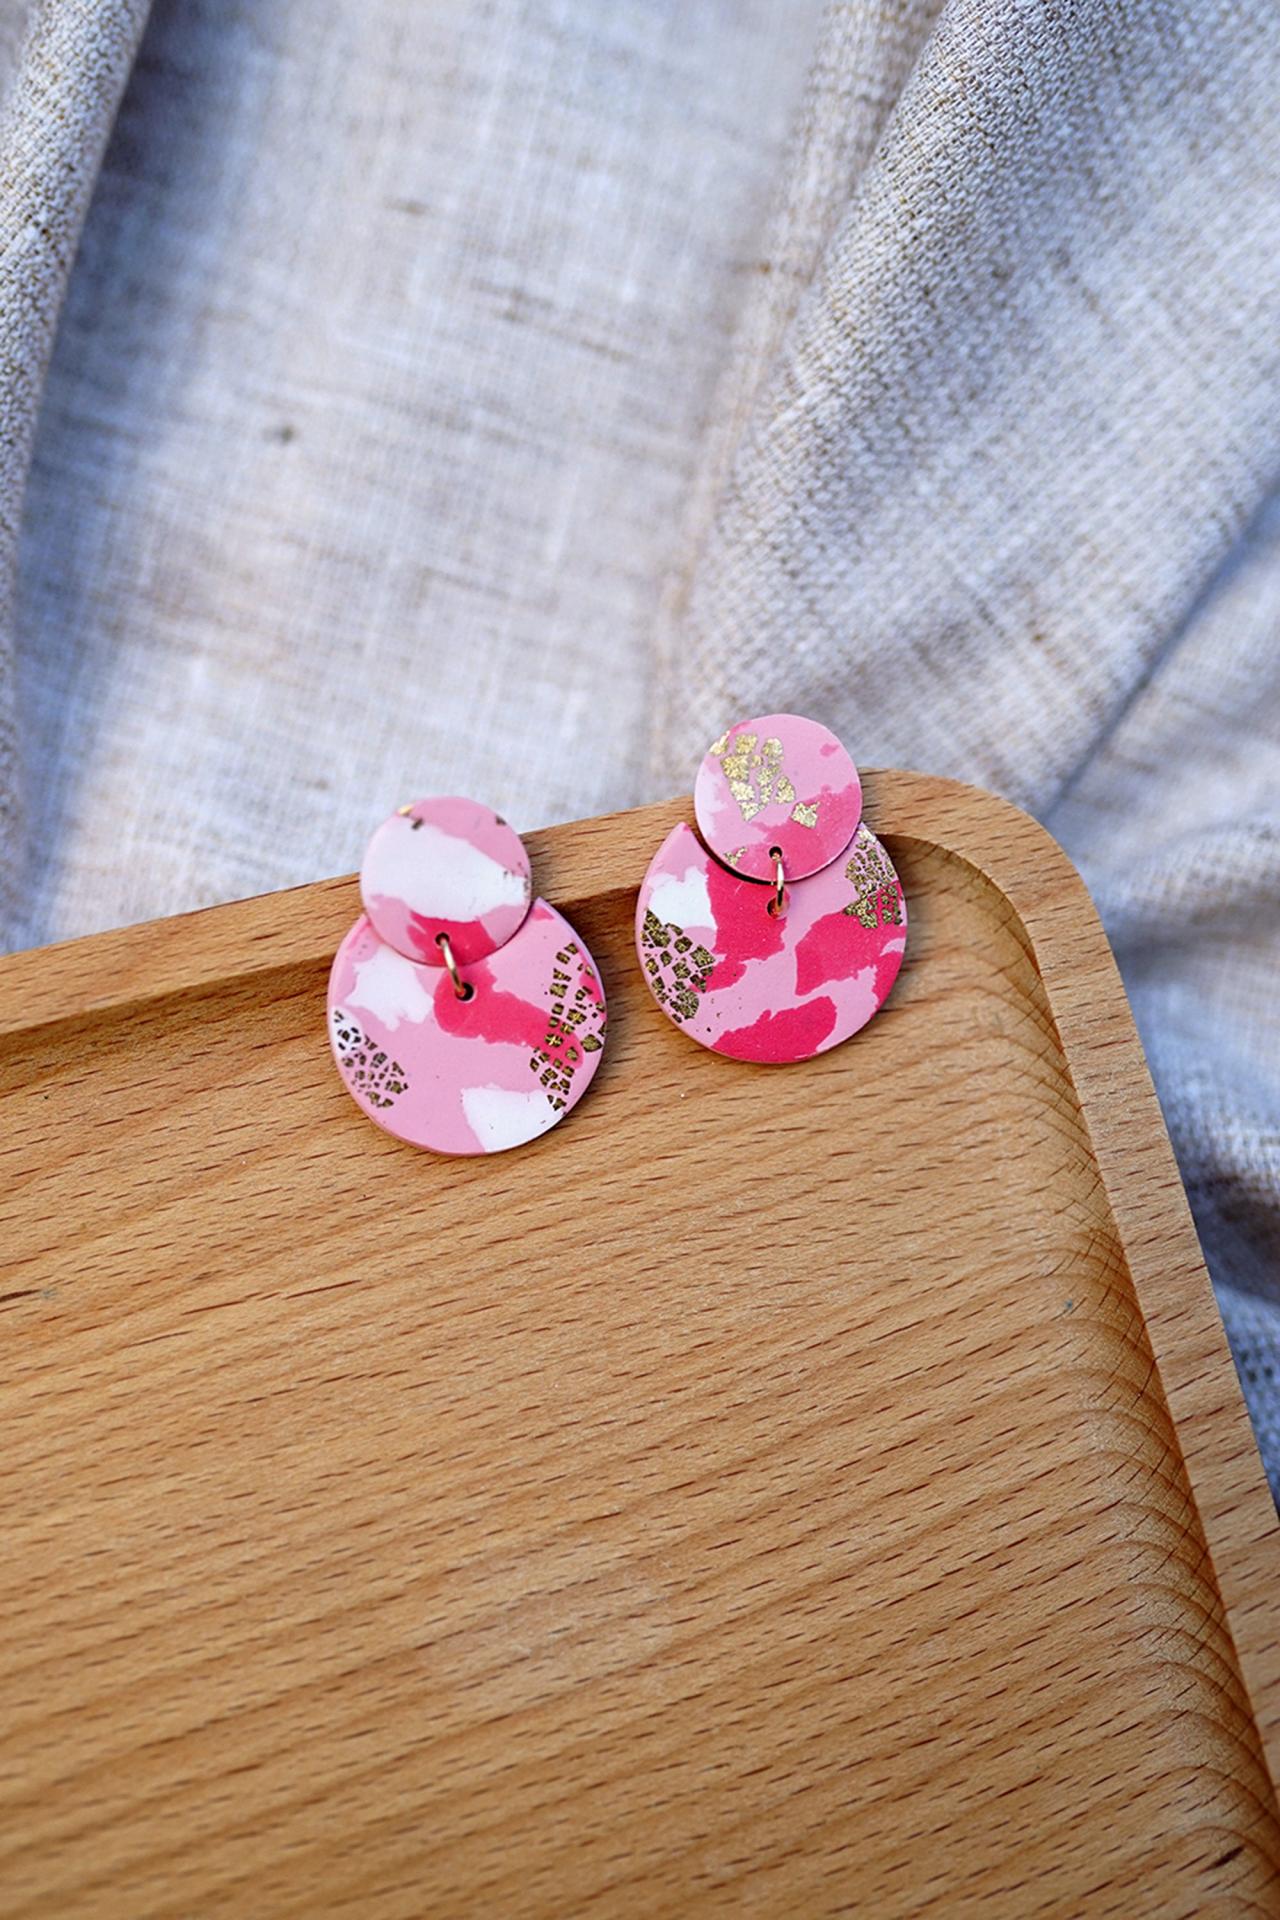 CLAY EARRINGS STUD Cute Sweet Pink Aesthetic Hip Boho Jewelry